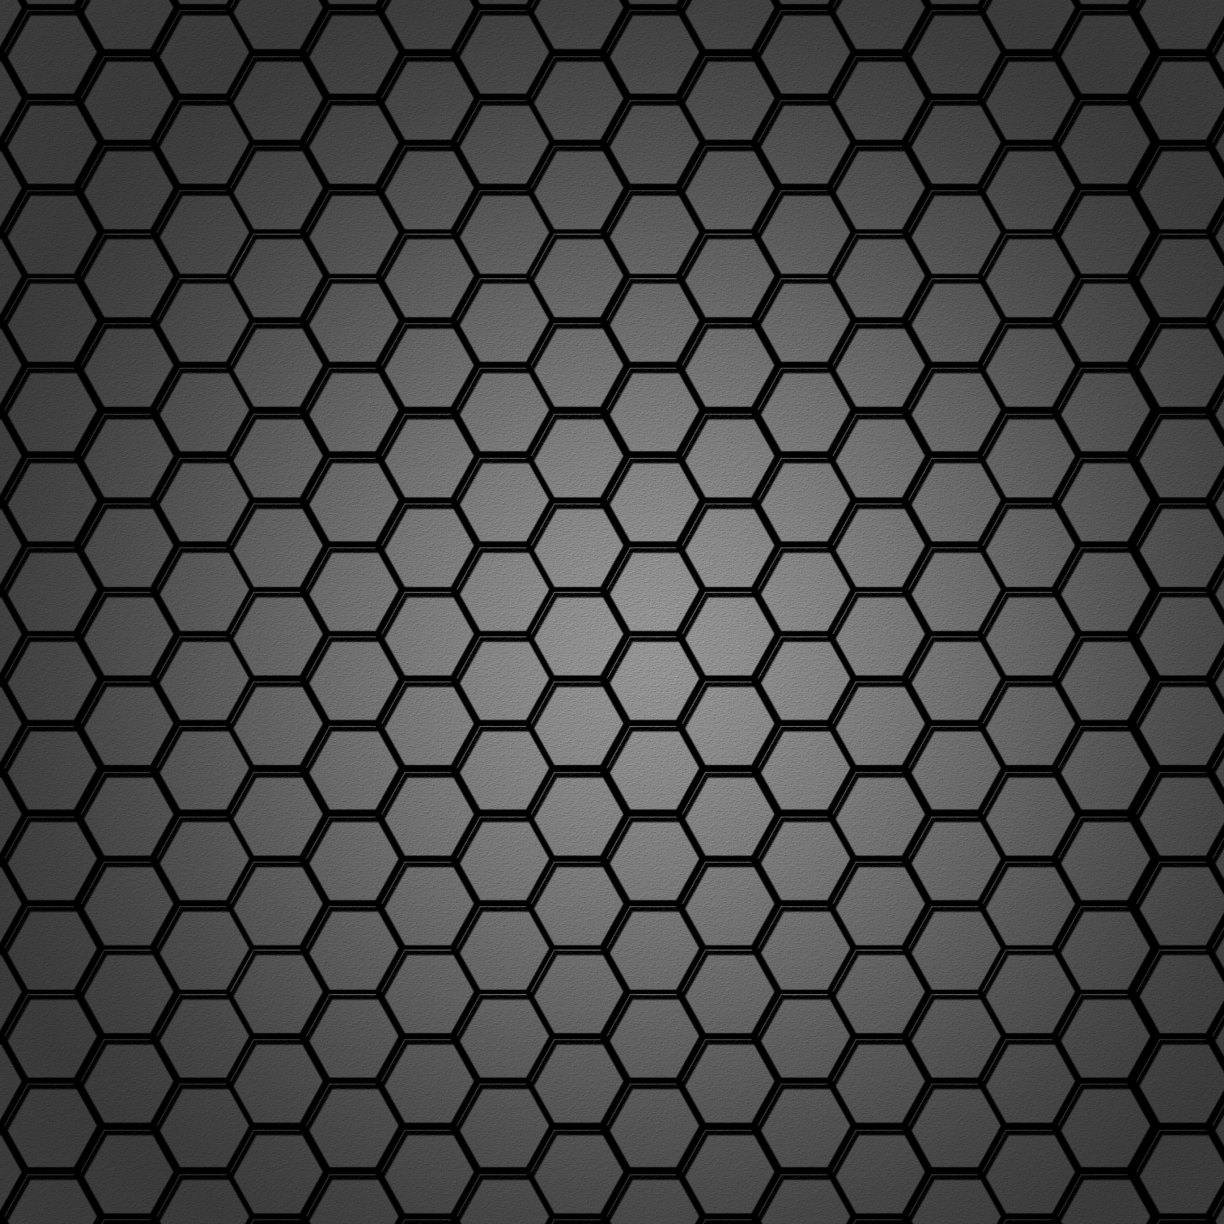 Wallpaper Black Hexagon Texture, Abstract Desktop Wallpaper, Hd Image 